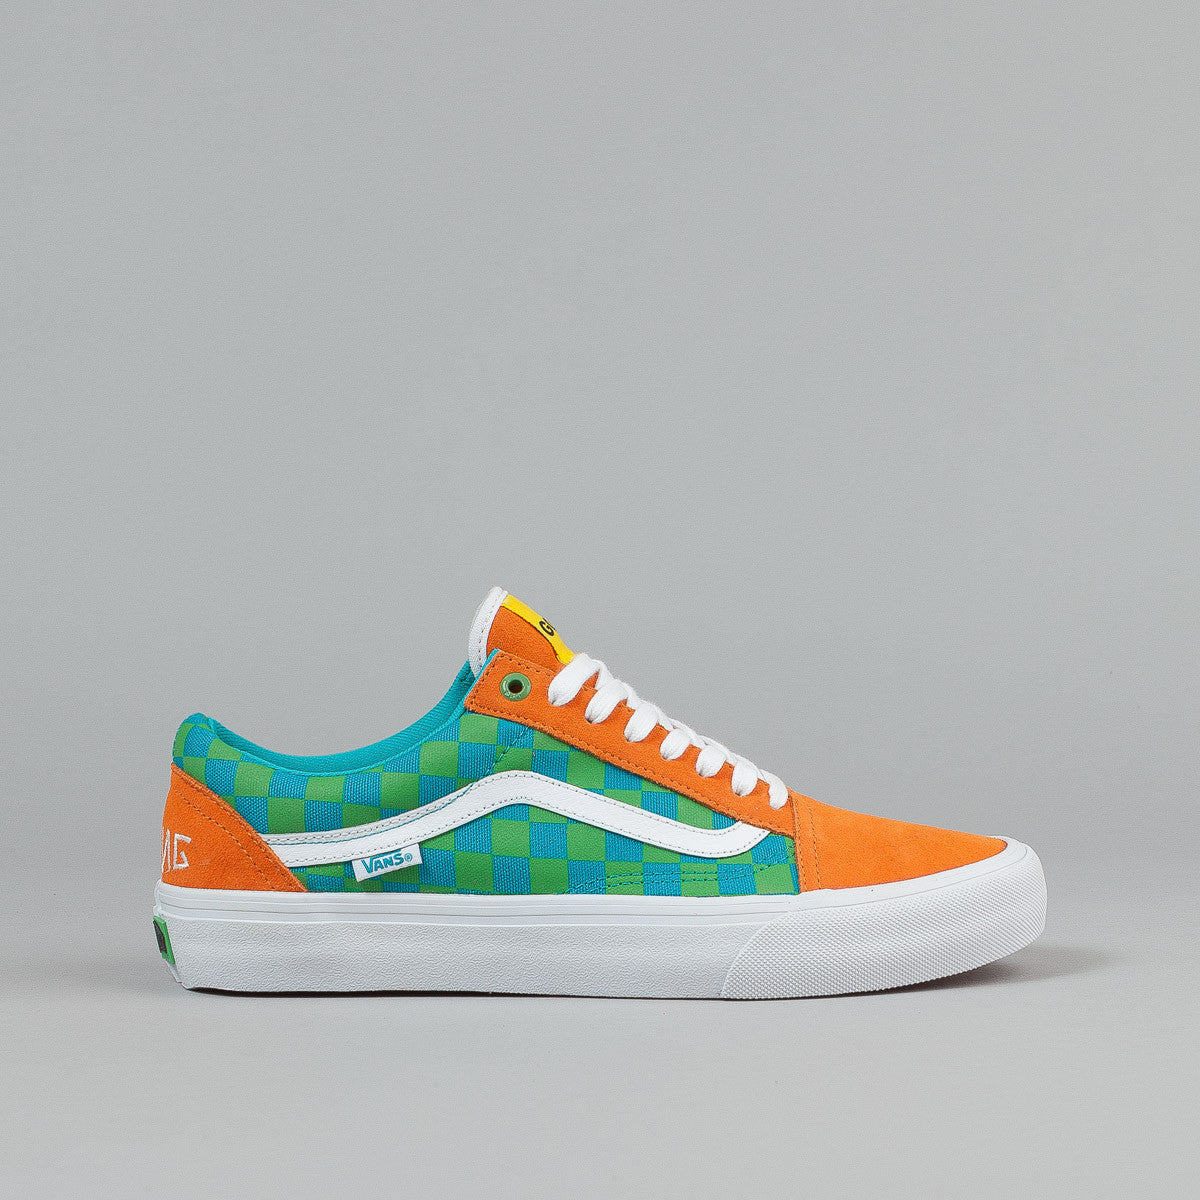 Vans Old Skool Pro Shoes (Golf Wang) - Orange / Blue / Green | Flatspot